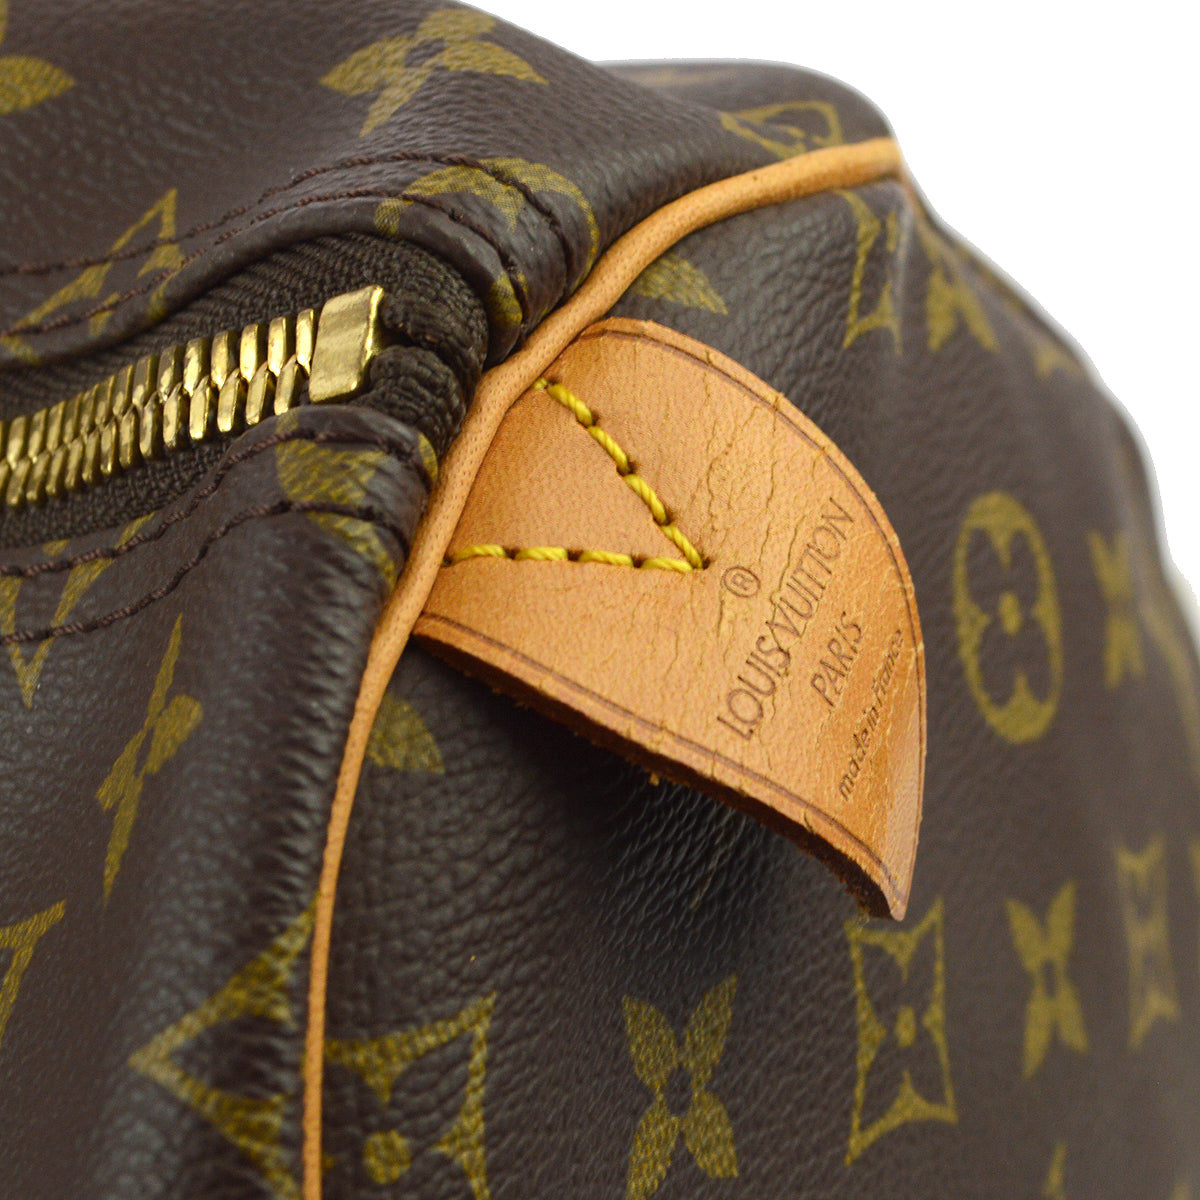 Louis Vuitton 1994 Monogram Keepall 55 Travel Duffle Handbag M41424